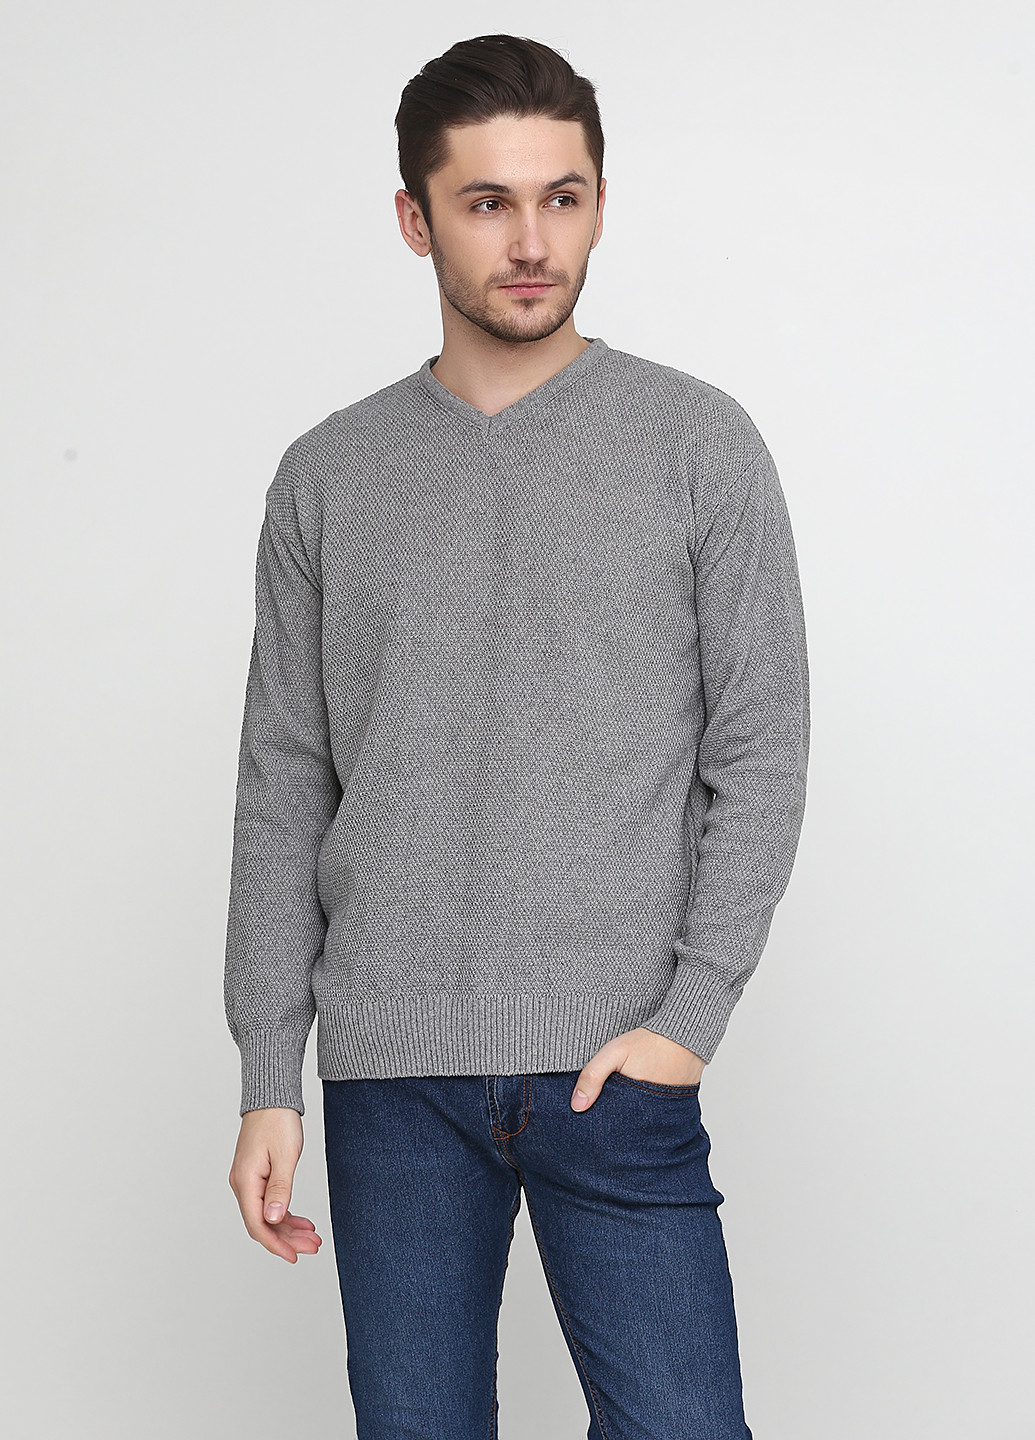 Серый демисезонный пуловер пуловер Enbiya